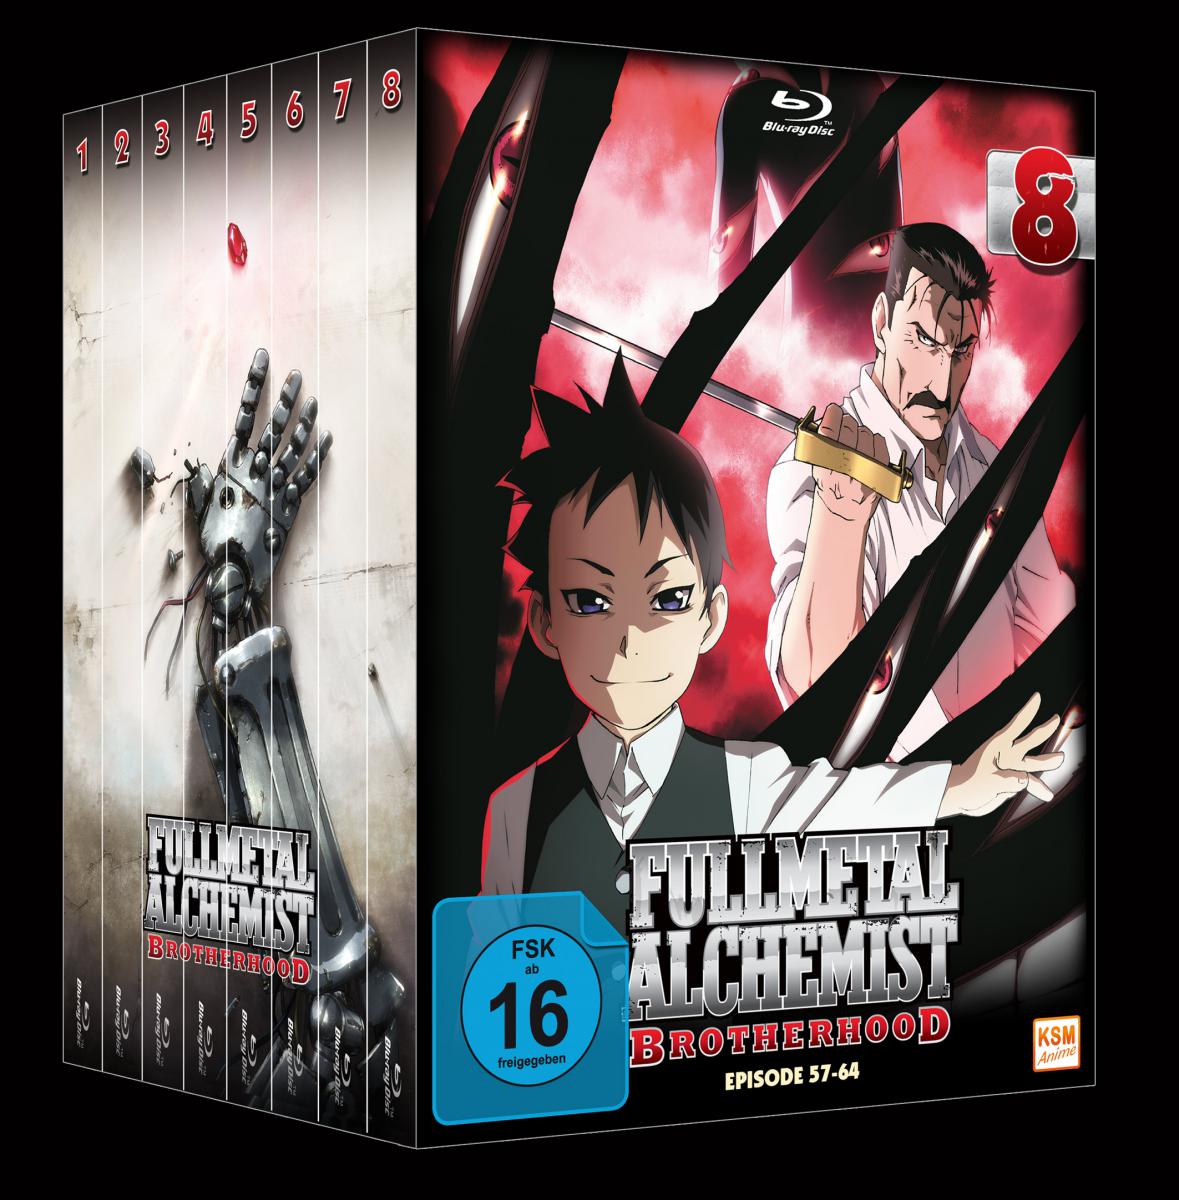 Fullmetal Alchemist: Brotherhood - Volume 4: Episode 25-32 (Limited Edition) Blu-ray Image 2